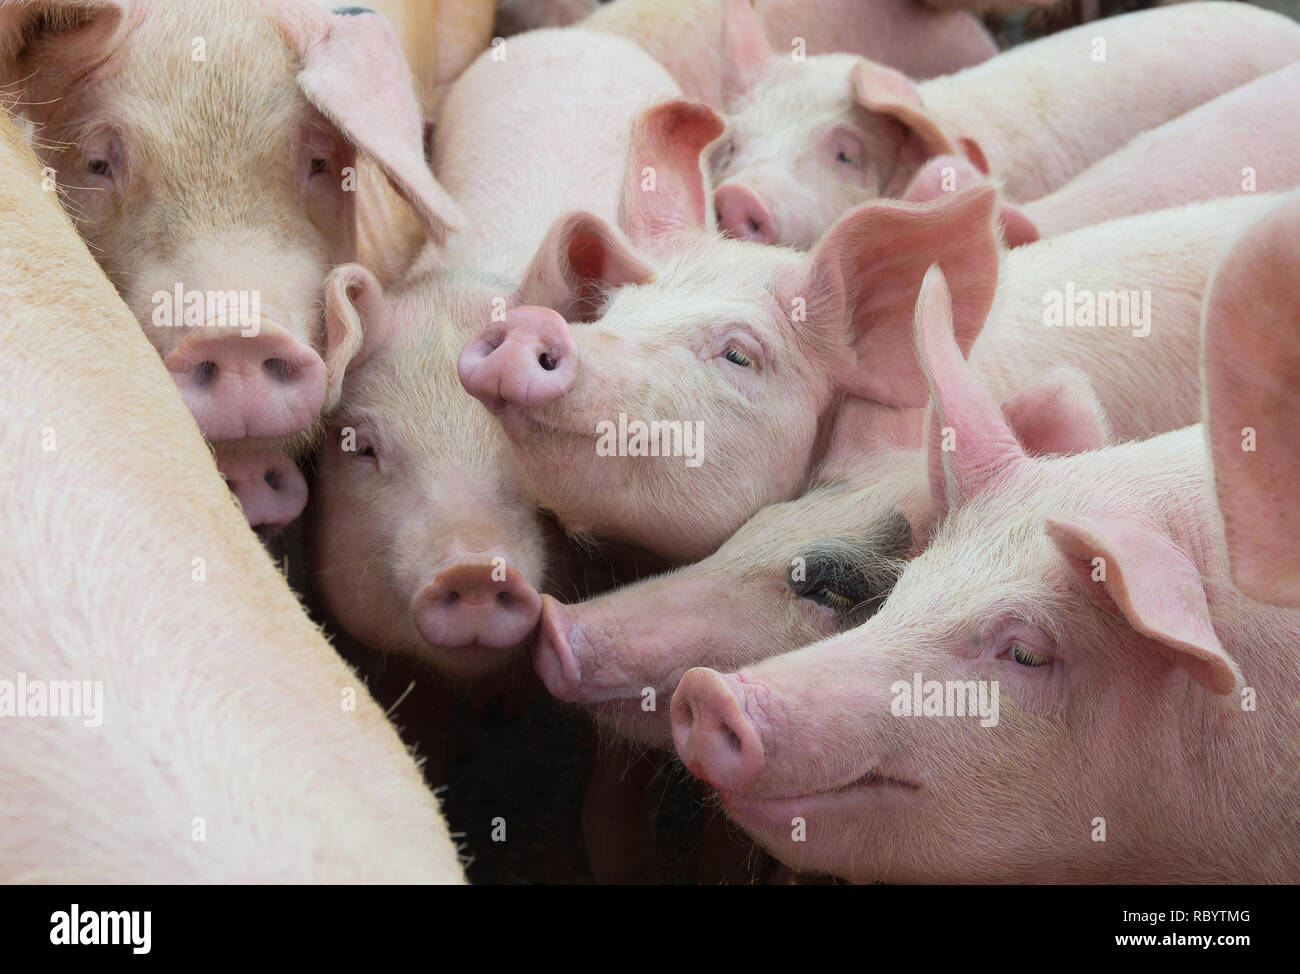 Livestock breeding. Group of pigs in farm yard. Stock Photo